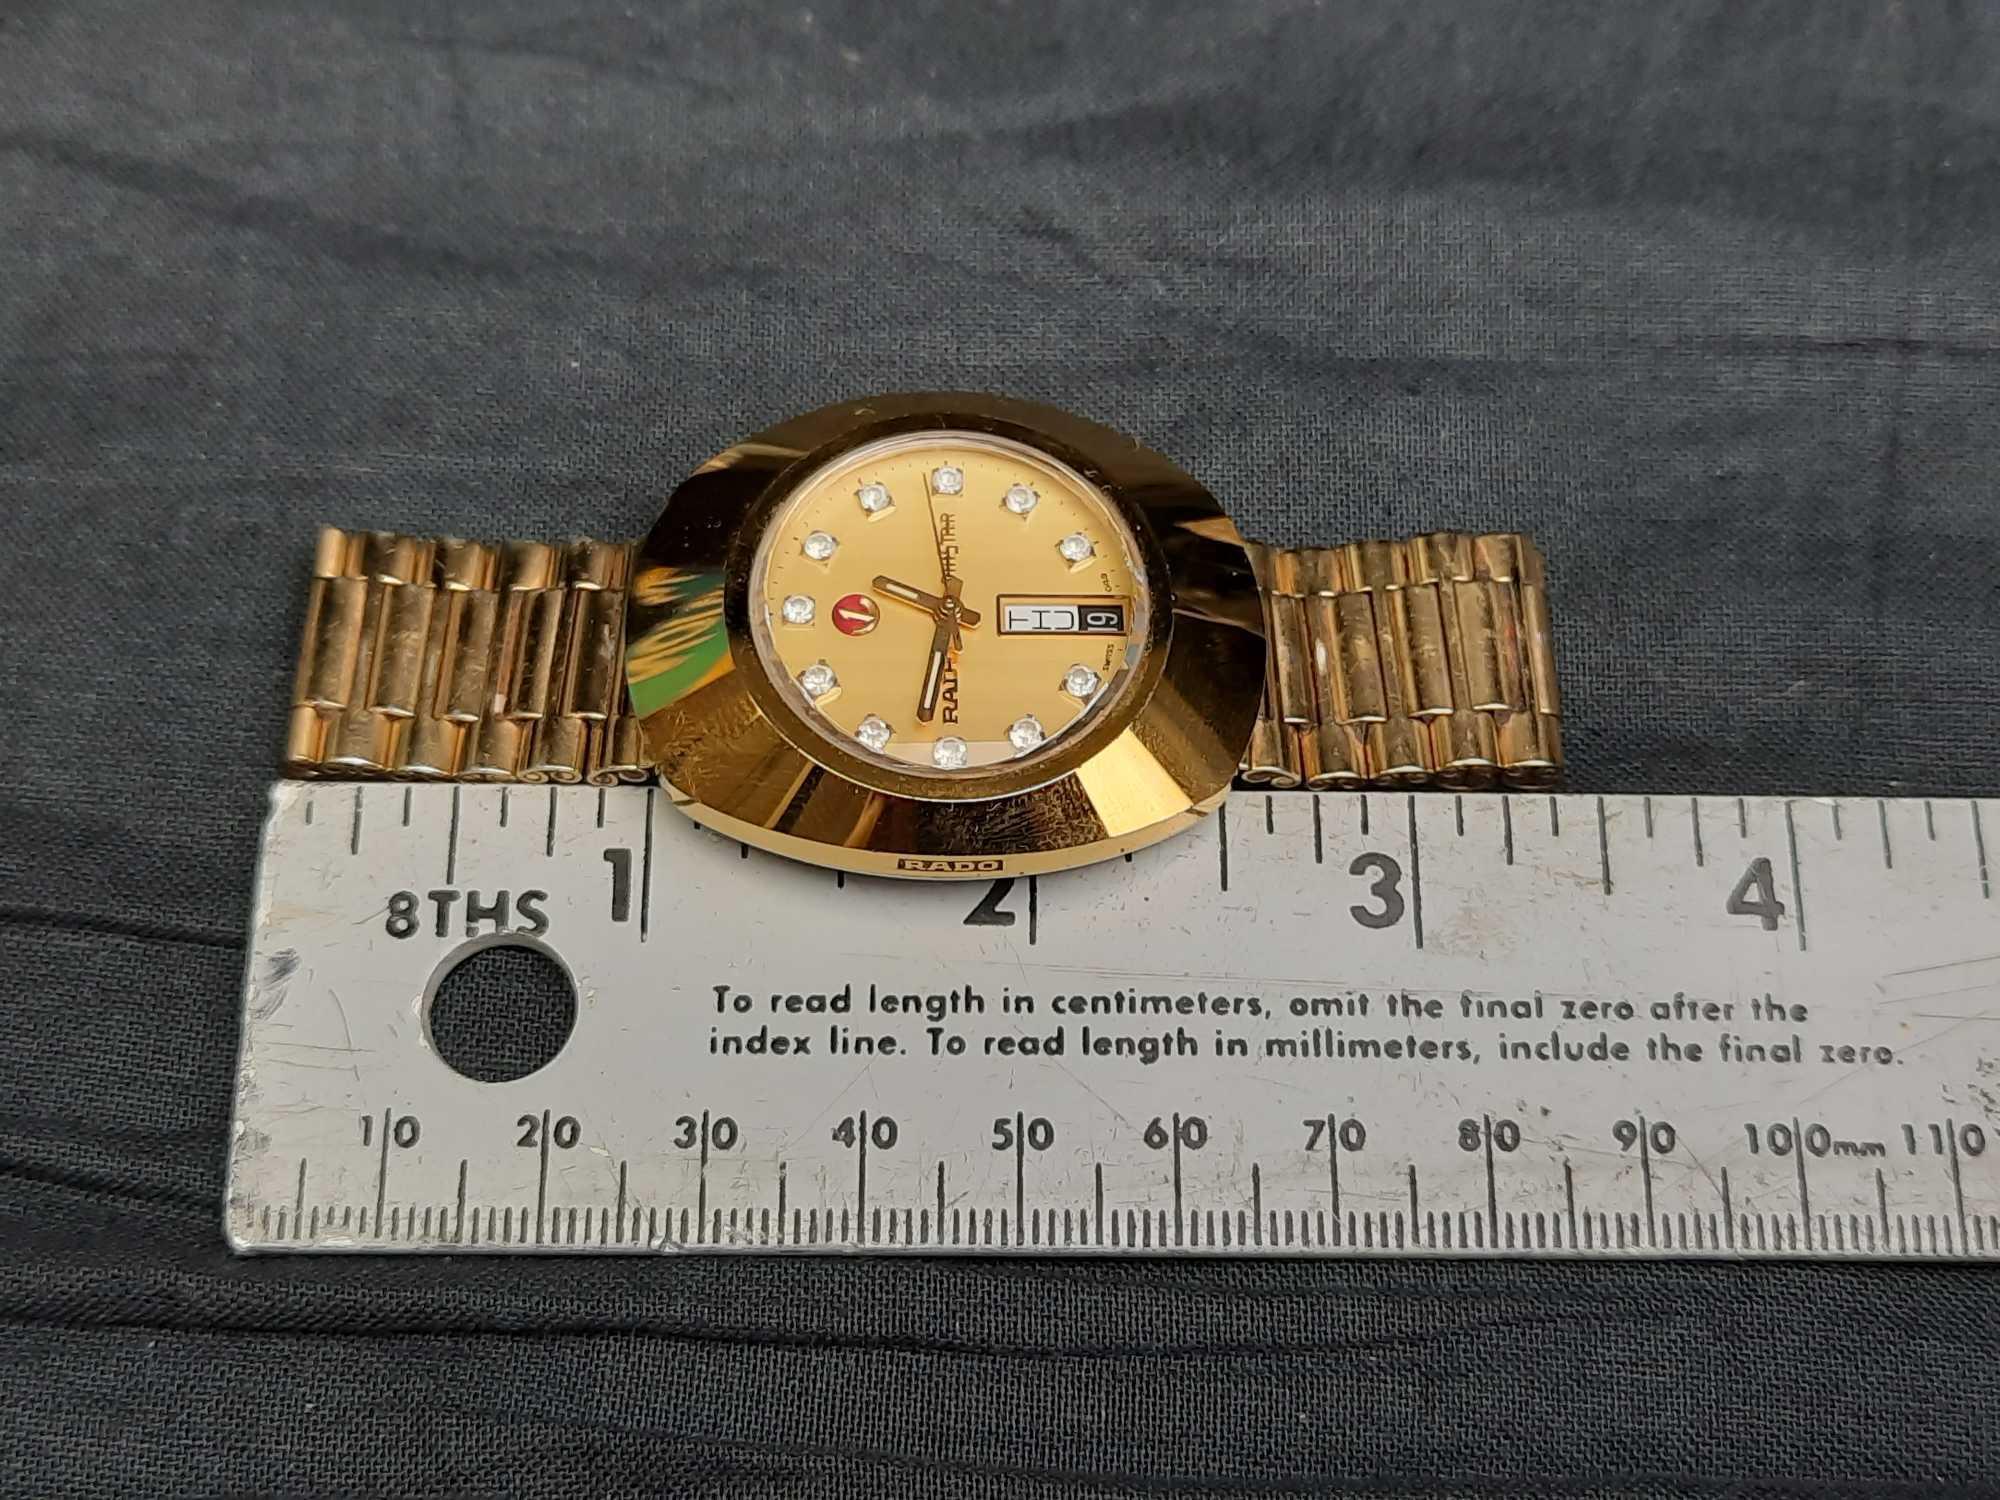 Vintage Rado Diaster 636.0313.3 Gold Plated Men's Watch